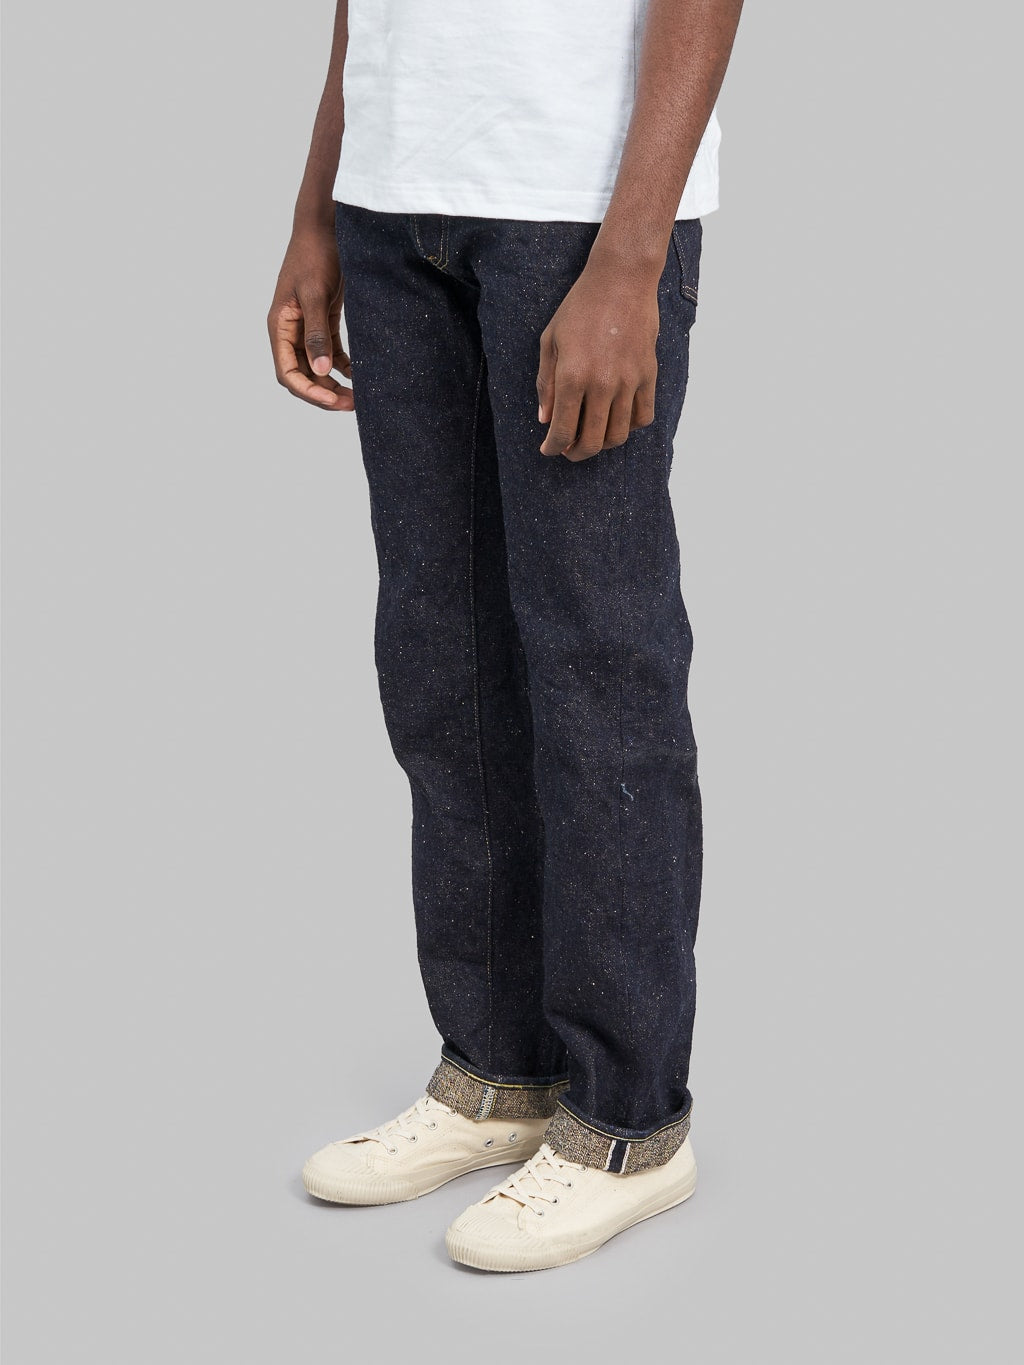 ONI Denim 266 "Asphalt" 20oz Relax Straight Jeans